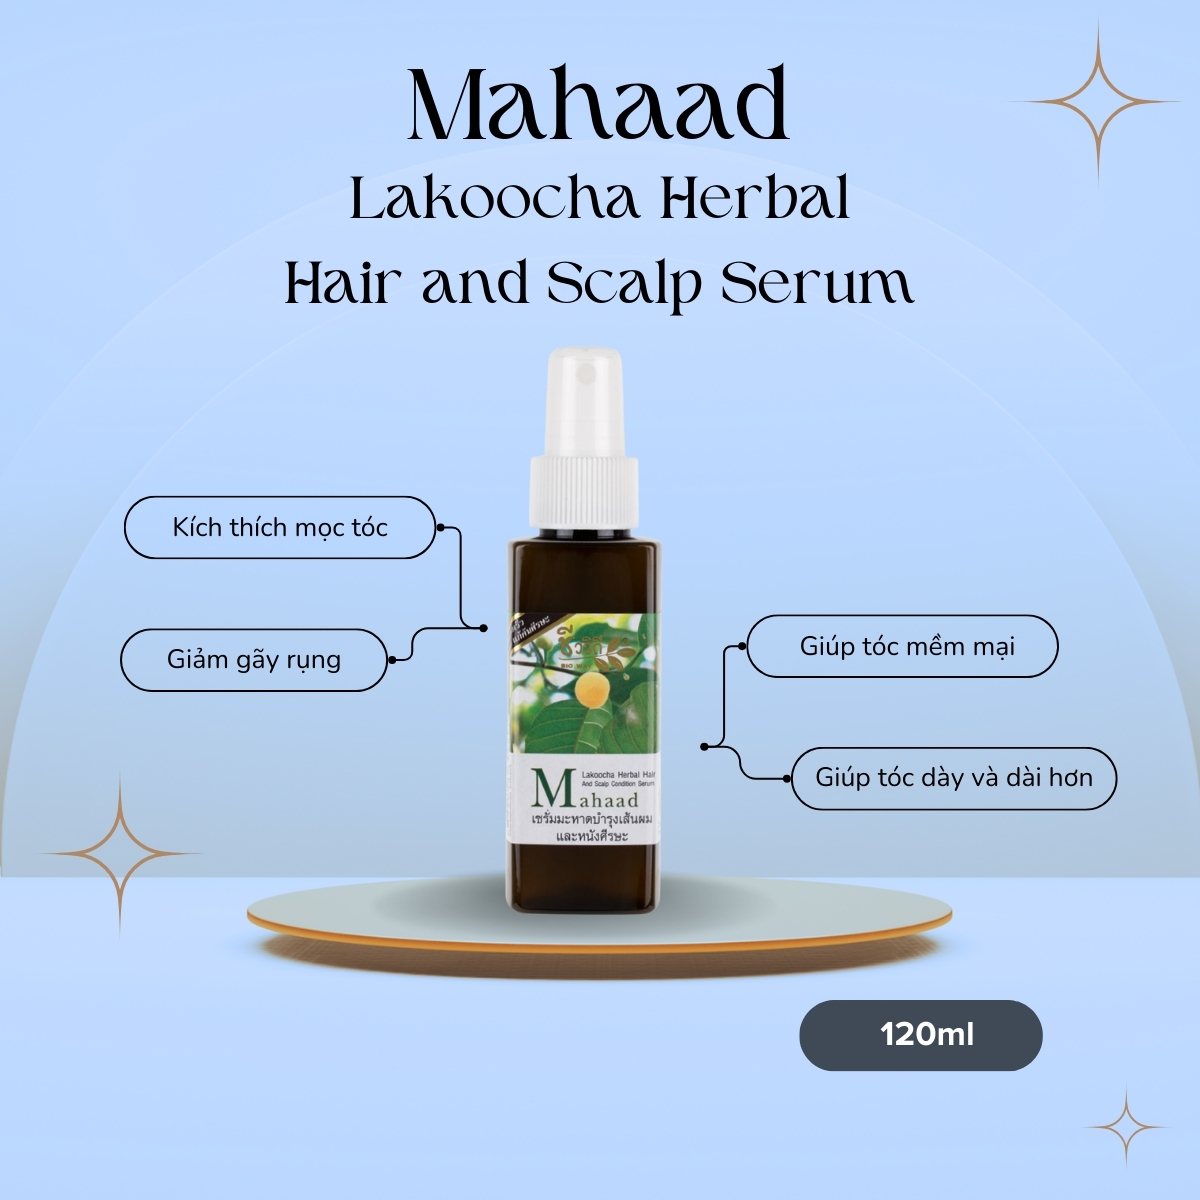 Mahaad Lakoocha Herbal Hair and Scalp Serum